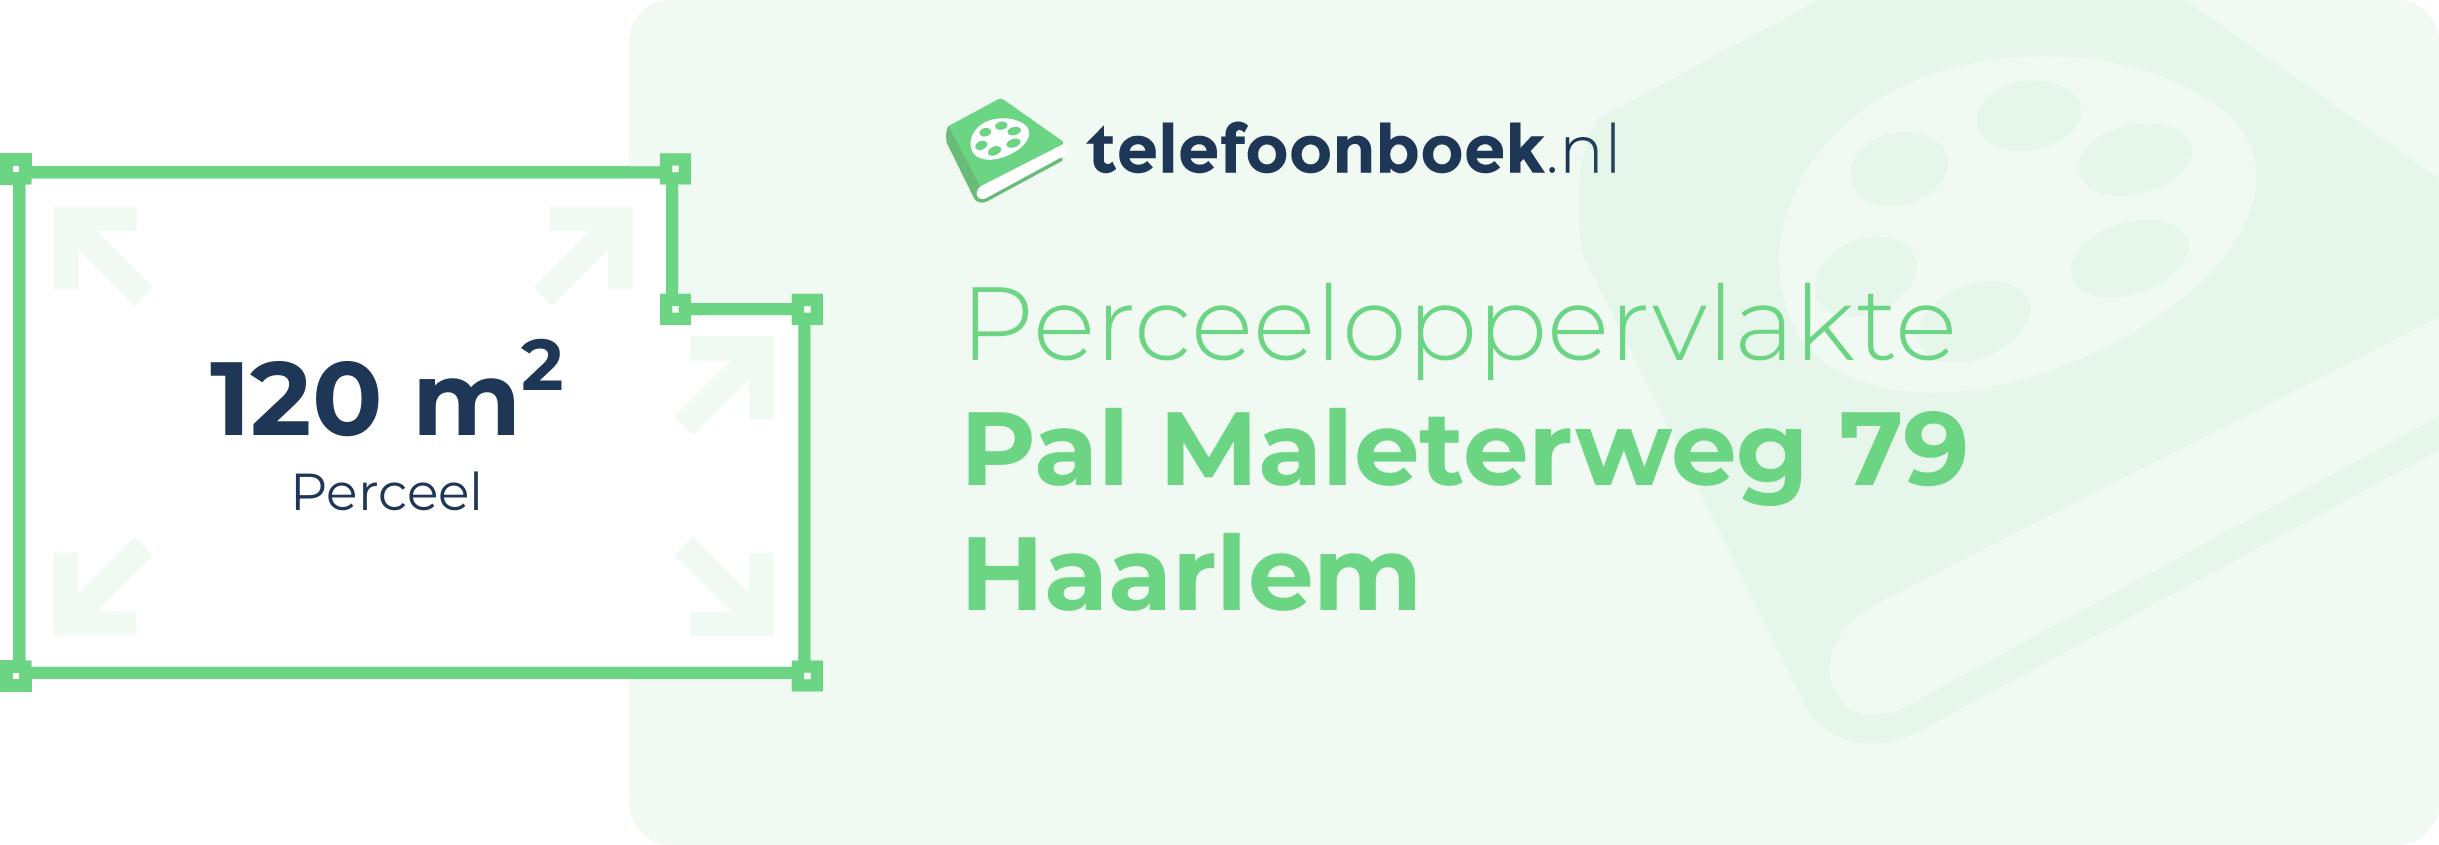 Perceeloppervlakte Pal Maleterweg 79 Haarlem